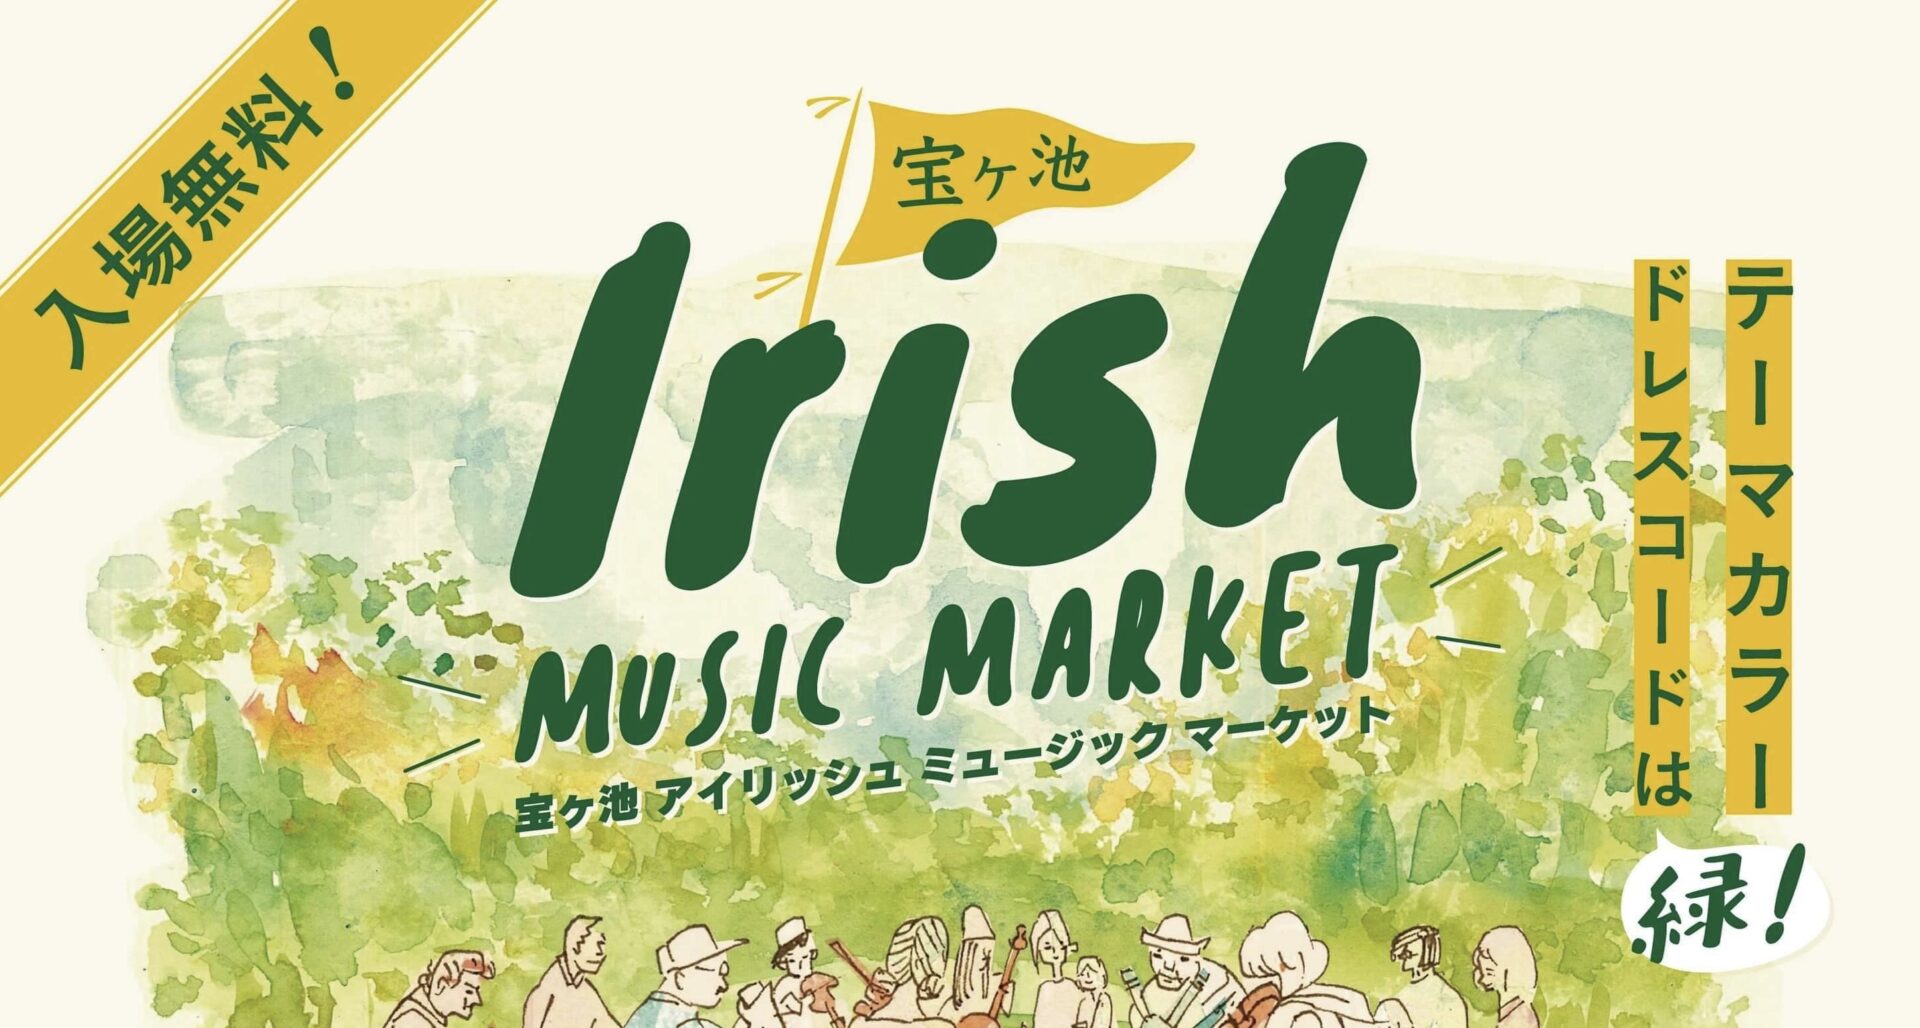 IrishMusicMarket